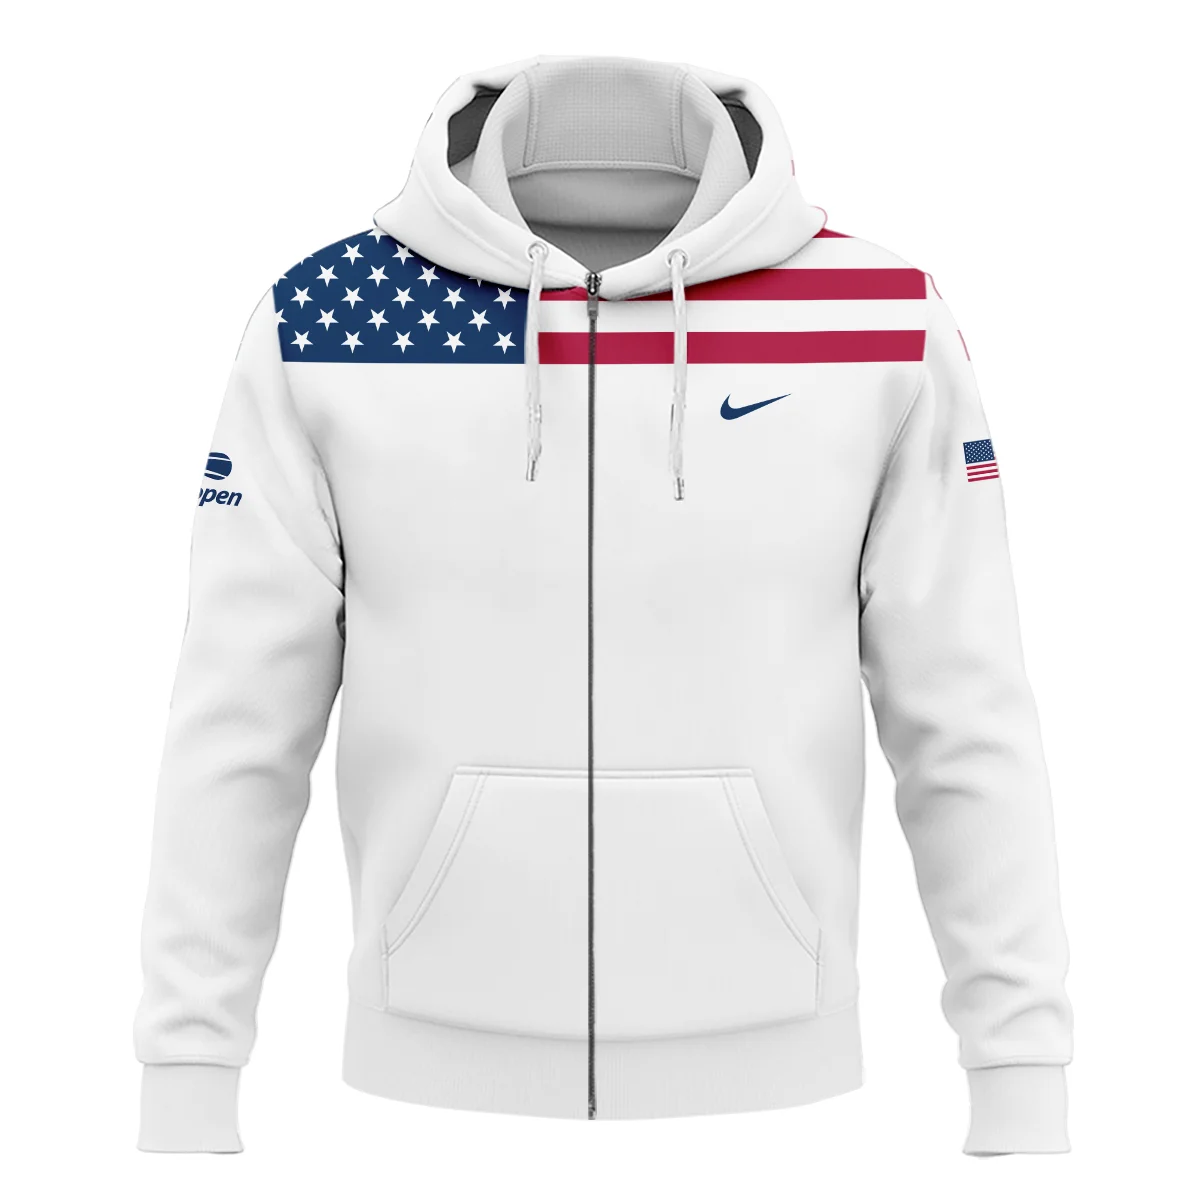 US Open Tennis Champions Nike USA Flag White Vneck Polo Shirt Style Classic Polo Shirt For Men